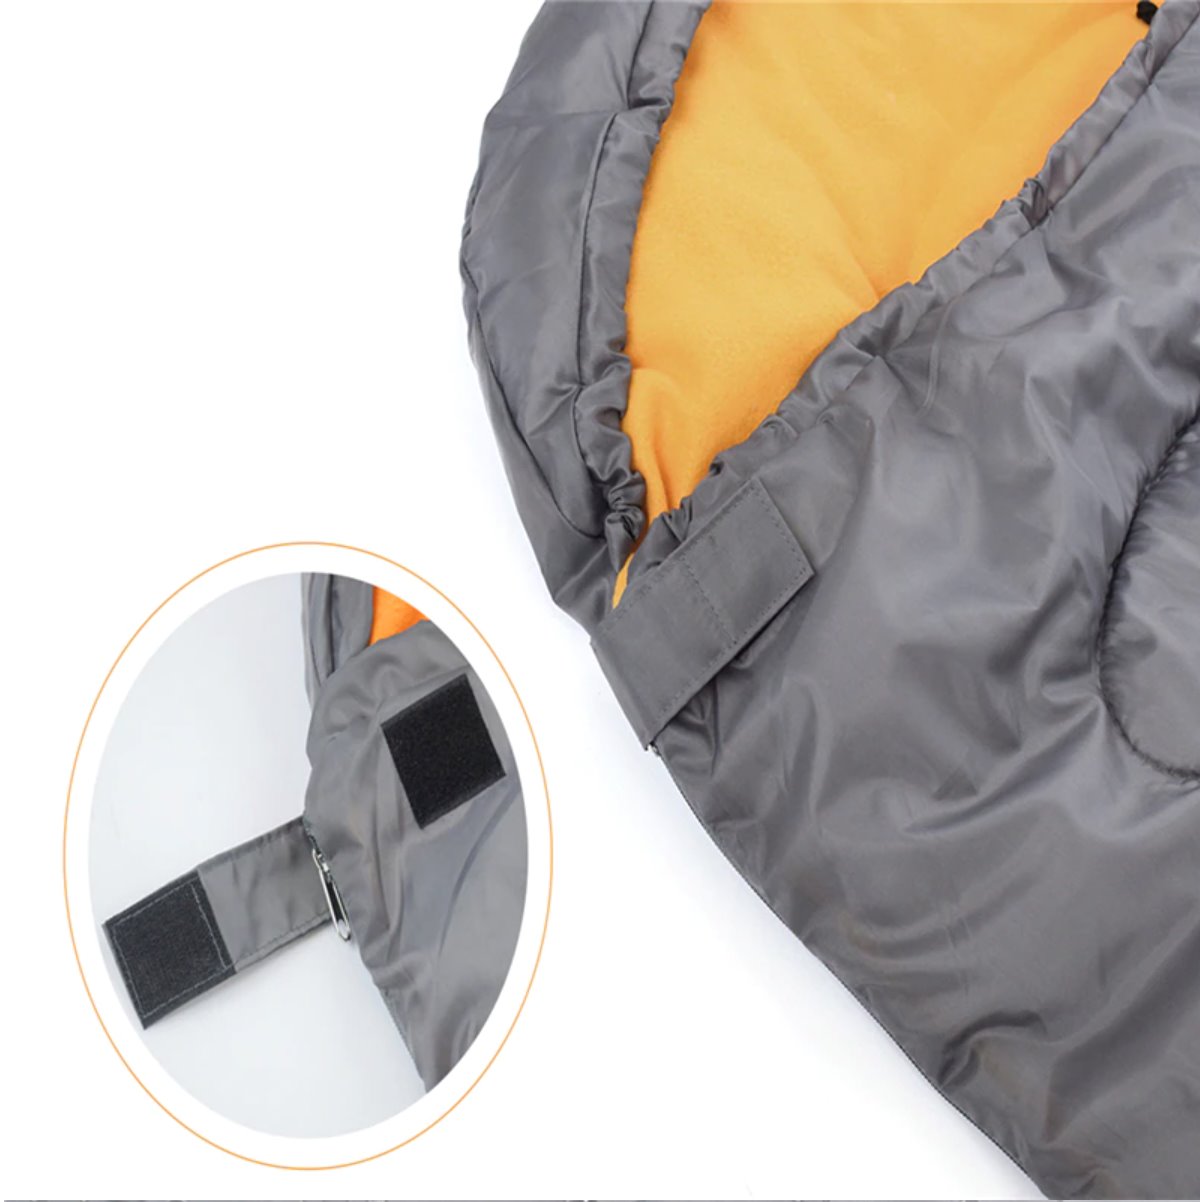 Waterproof Dog Sleeping Bag Dog Beds BestPet 